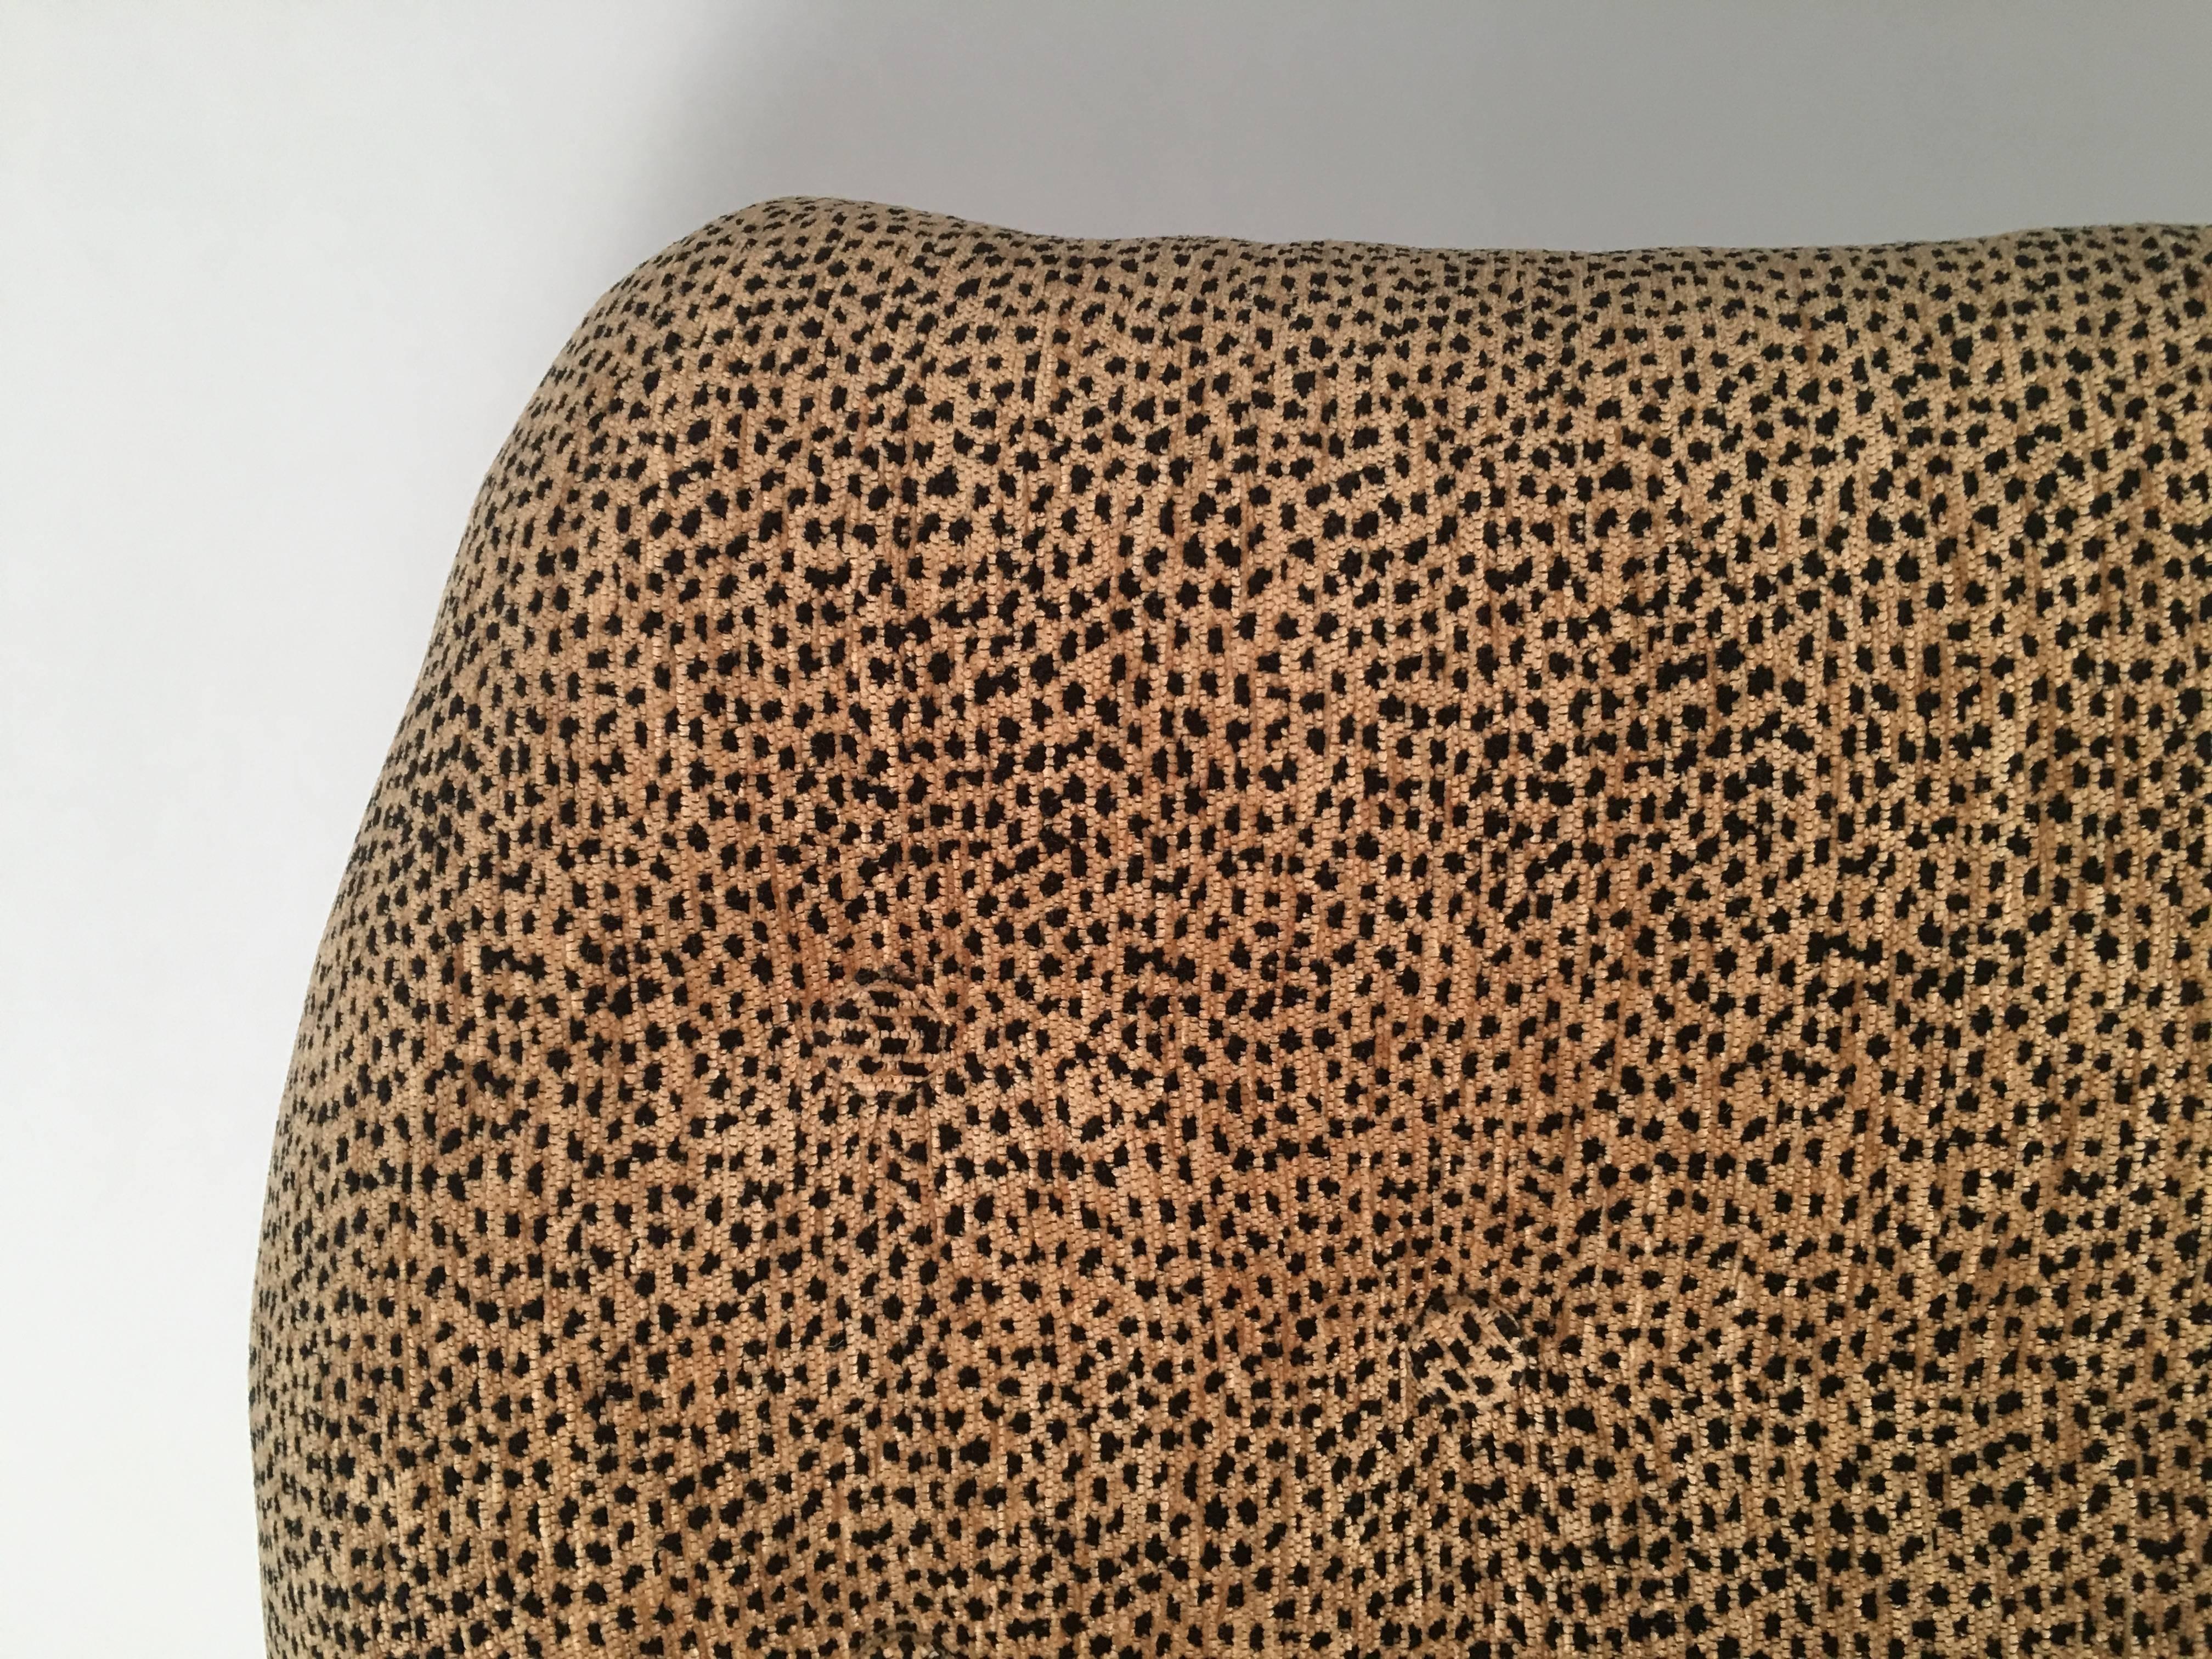 American Neoclassical 19th Century Slipper Chair with Leopard Velvet Upholstery